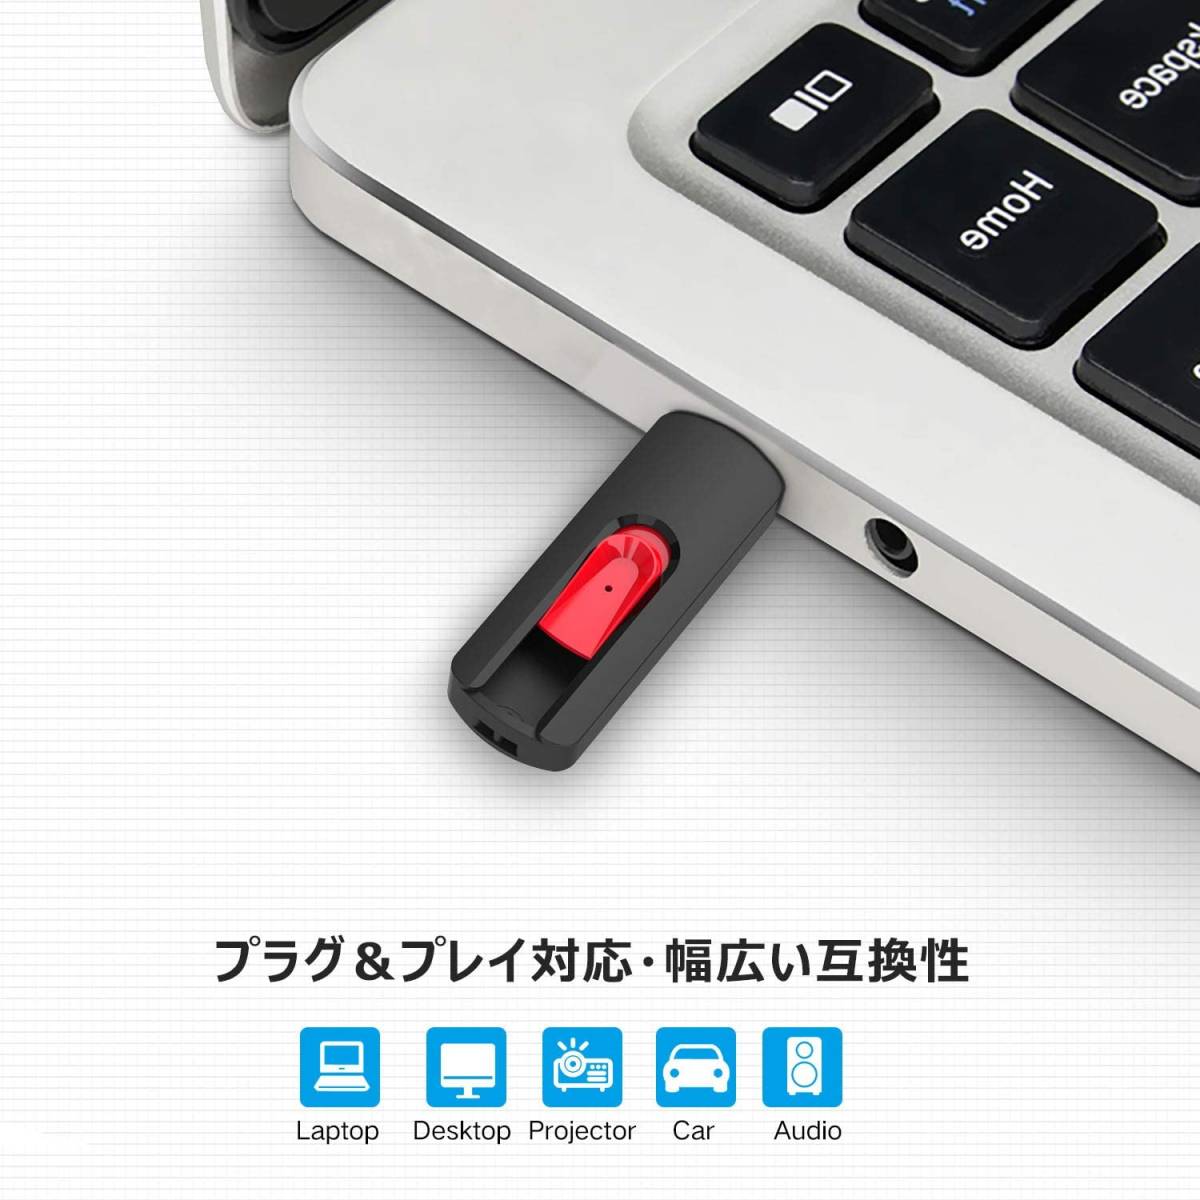 USBメモリ32GB USB 3.0 USBメモリースティック スライド式 フラッシュドライブ データ転送